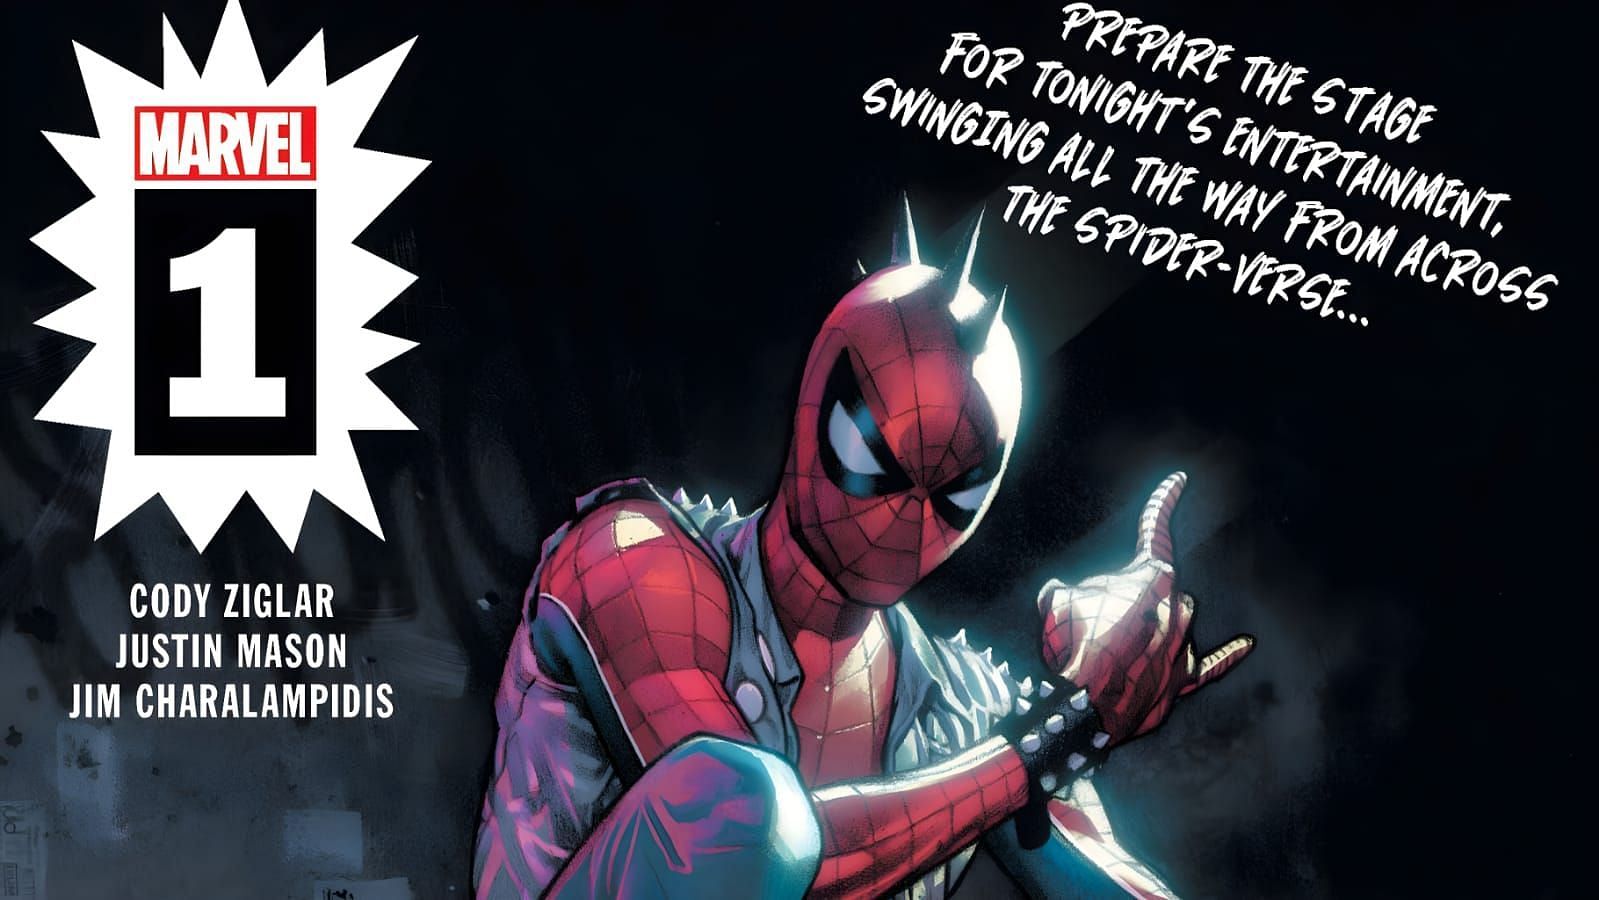 Spider-Punk strikes a fun pose on his comic cover (Image via Marvel Comics)